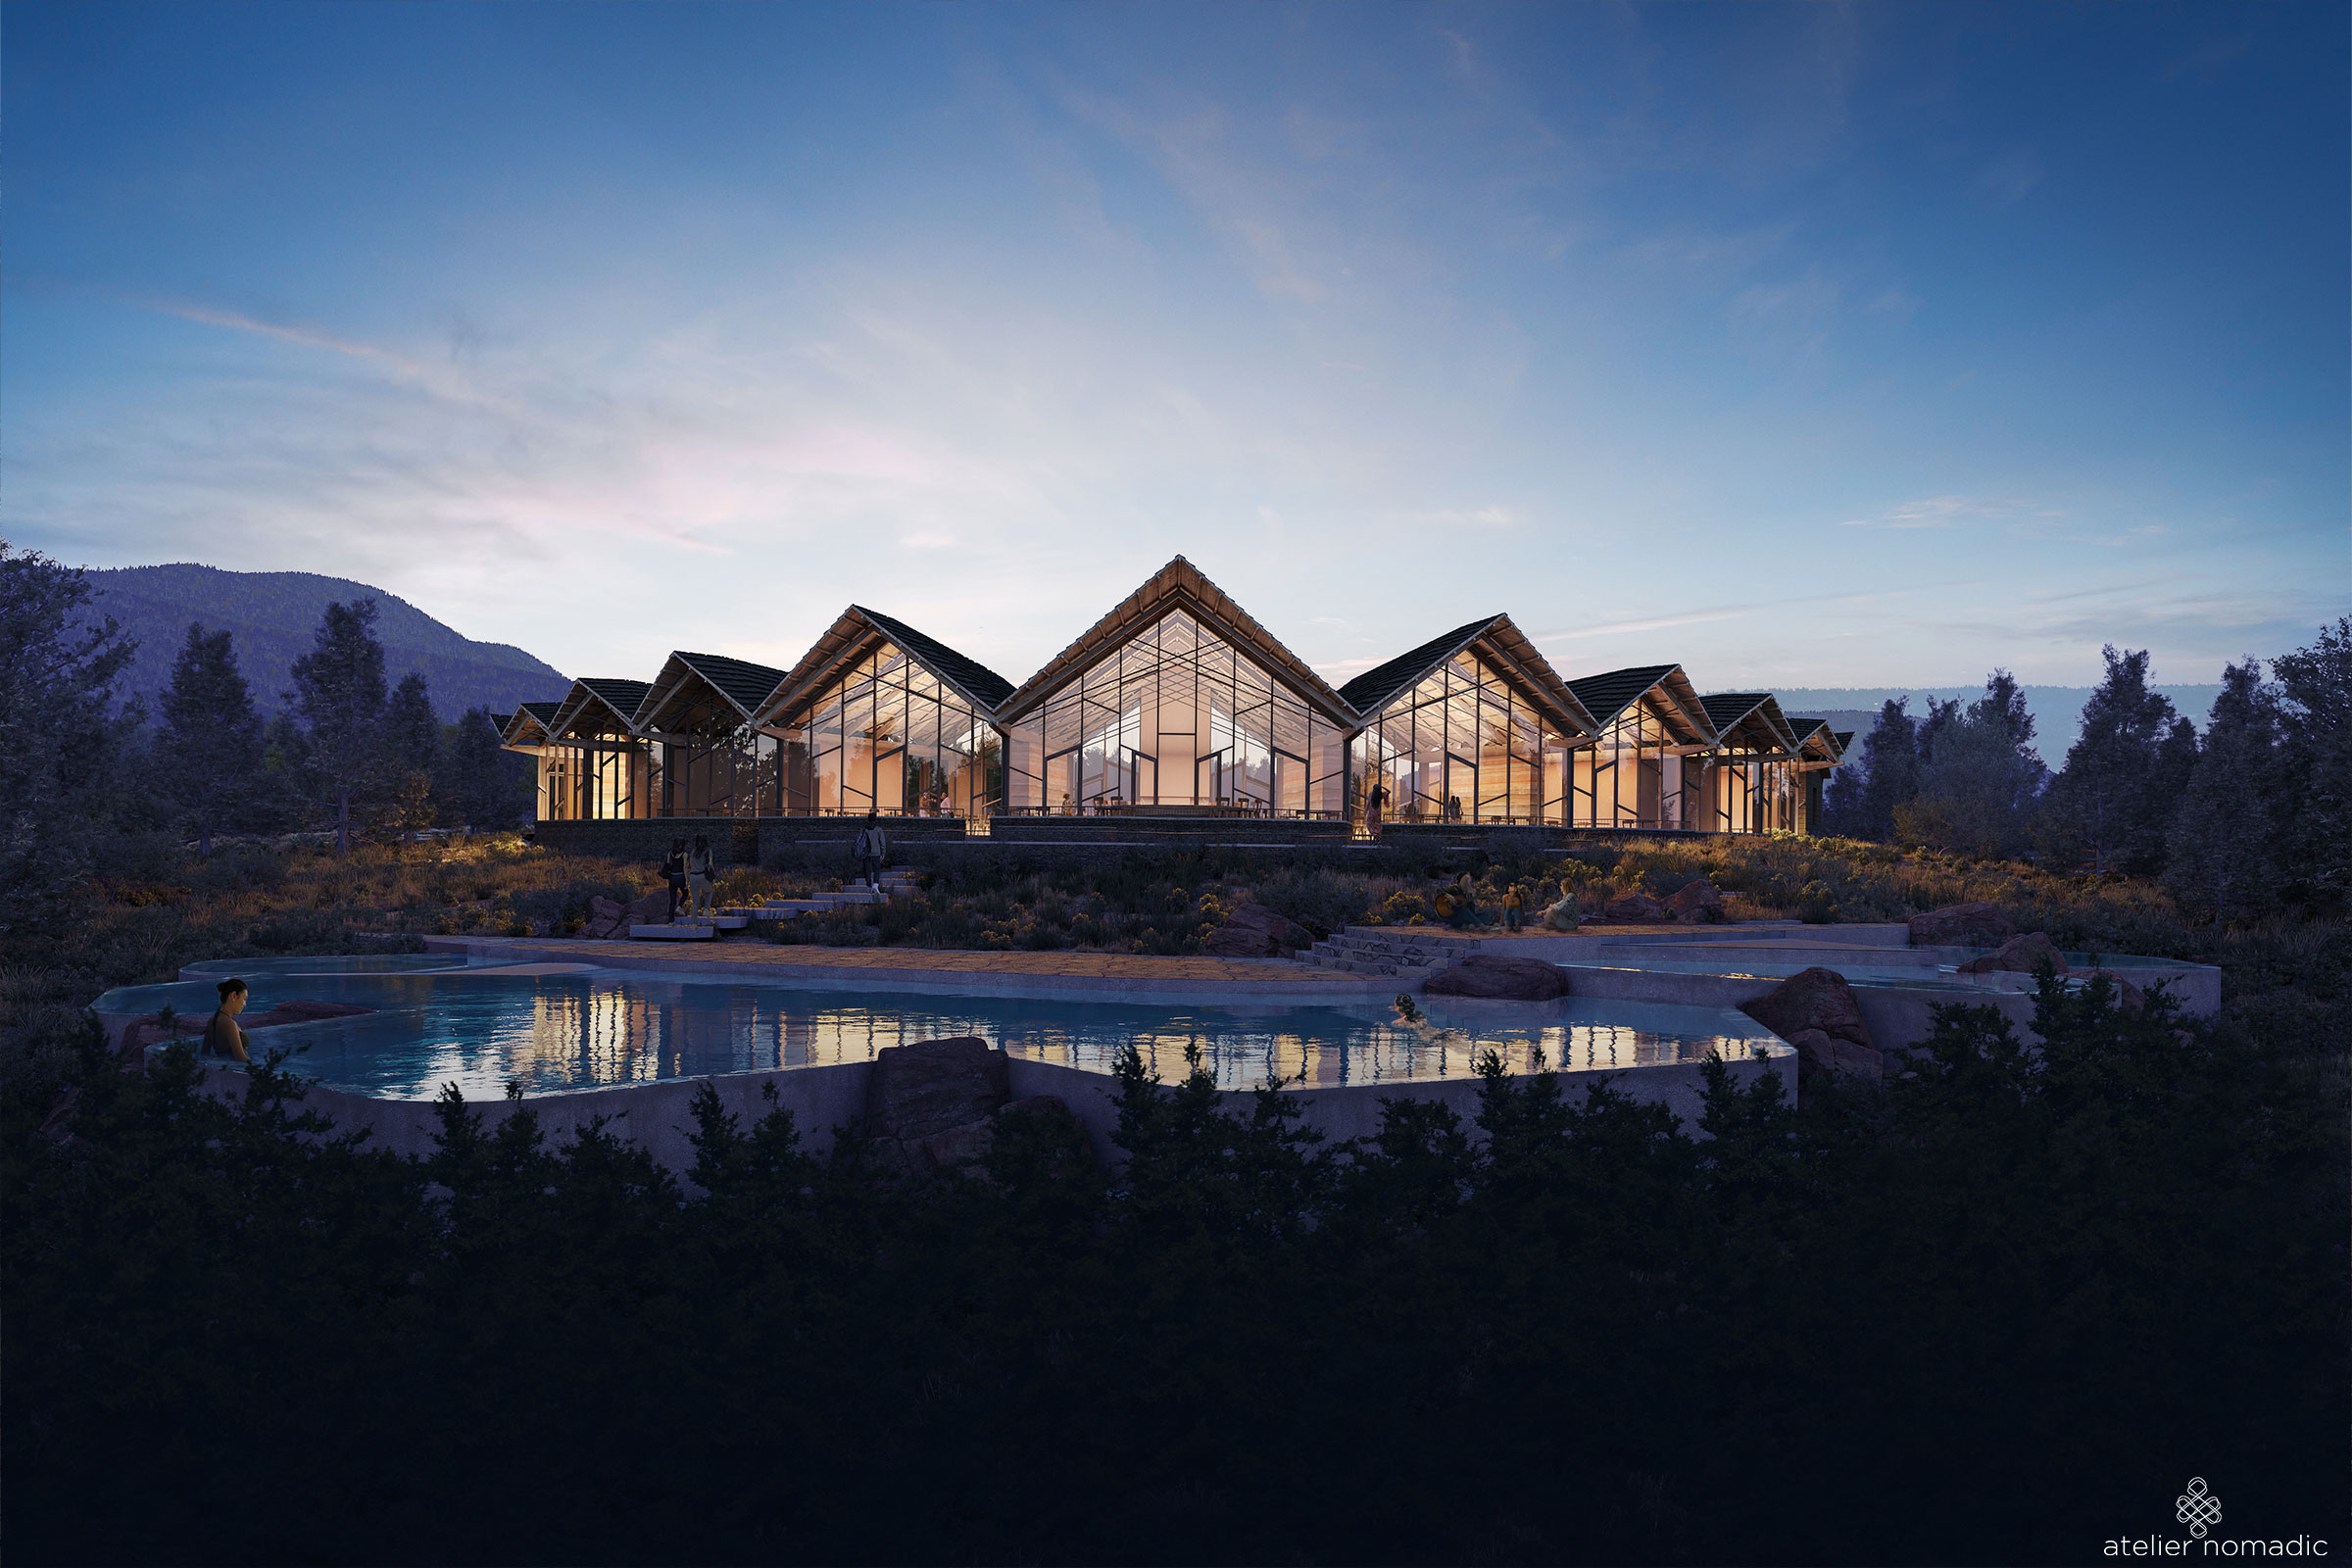 Mountain Lodge at zion national park utah designed by nomadic resorts